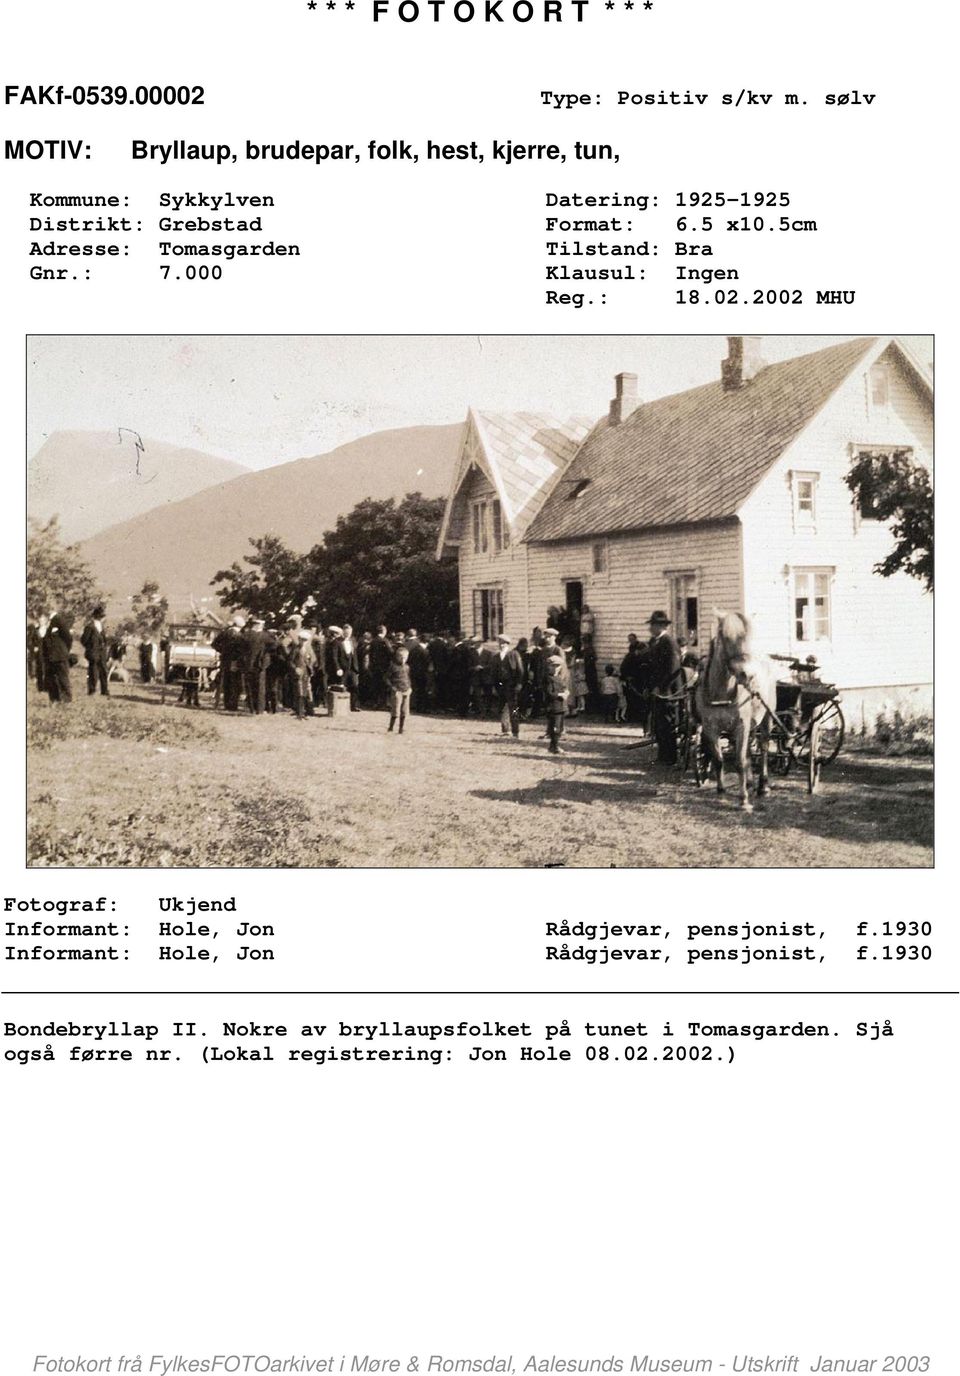 Format: 6.5 x10.5cm Adresse: Tomasgarden Tilstand: Bra Gnr.: 7.000 Klausul: Ingen Reg.: 18.02.